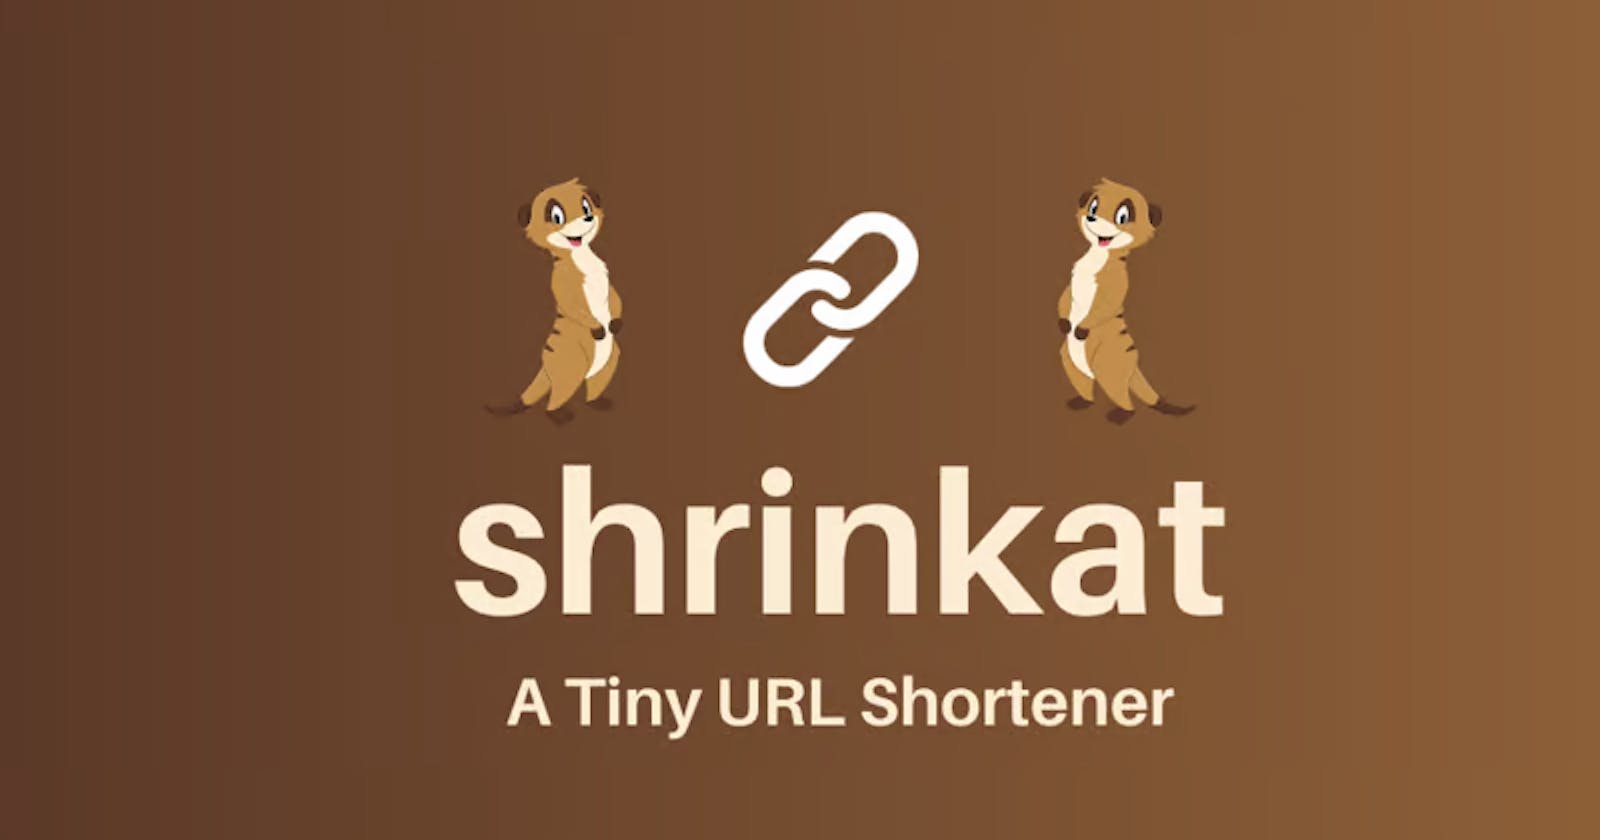 I Present To You - shrinkat - A Tiny URL Shortener